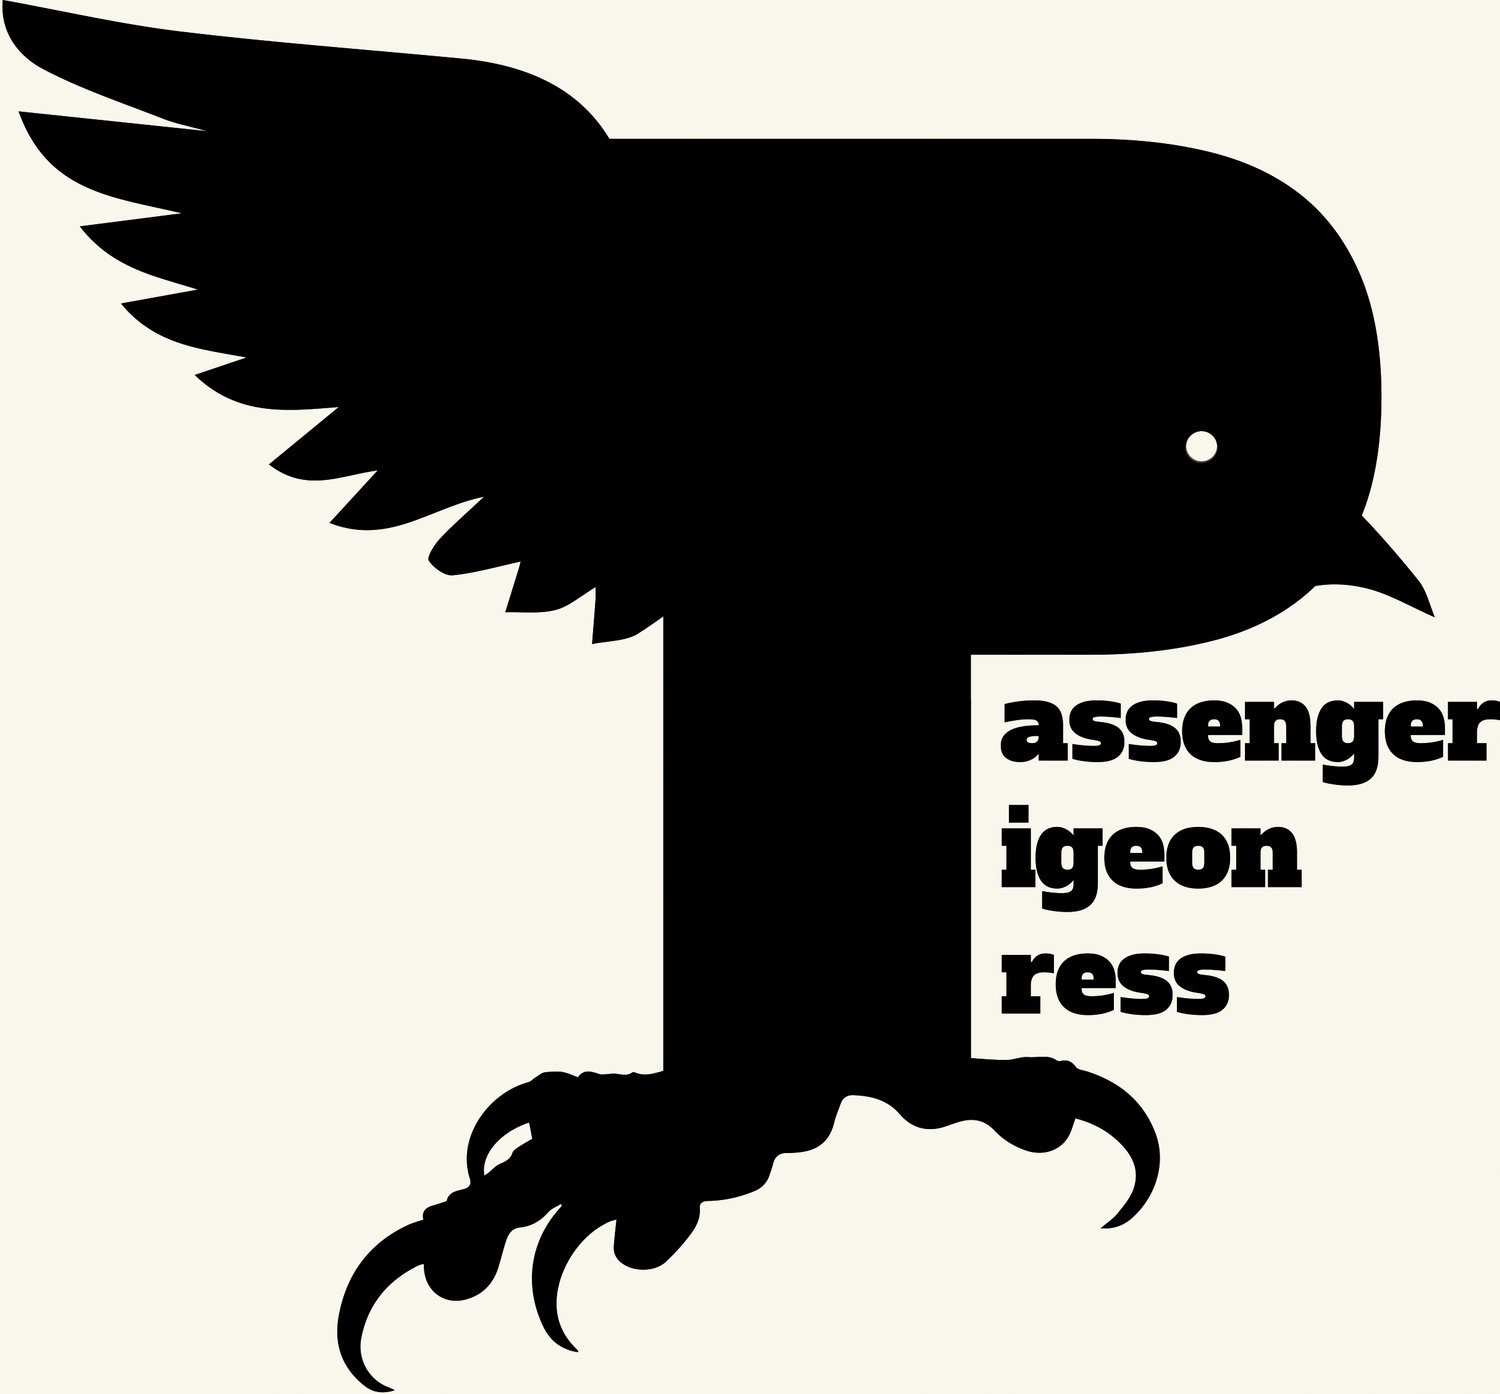 Passenger Pigeon Press